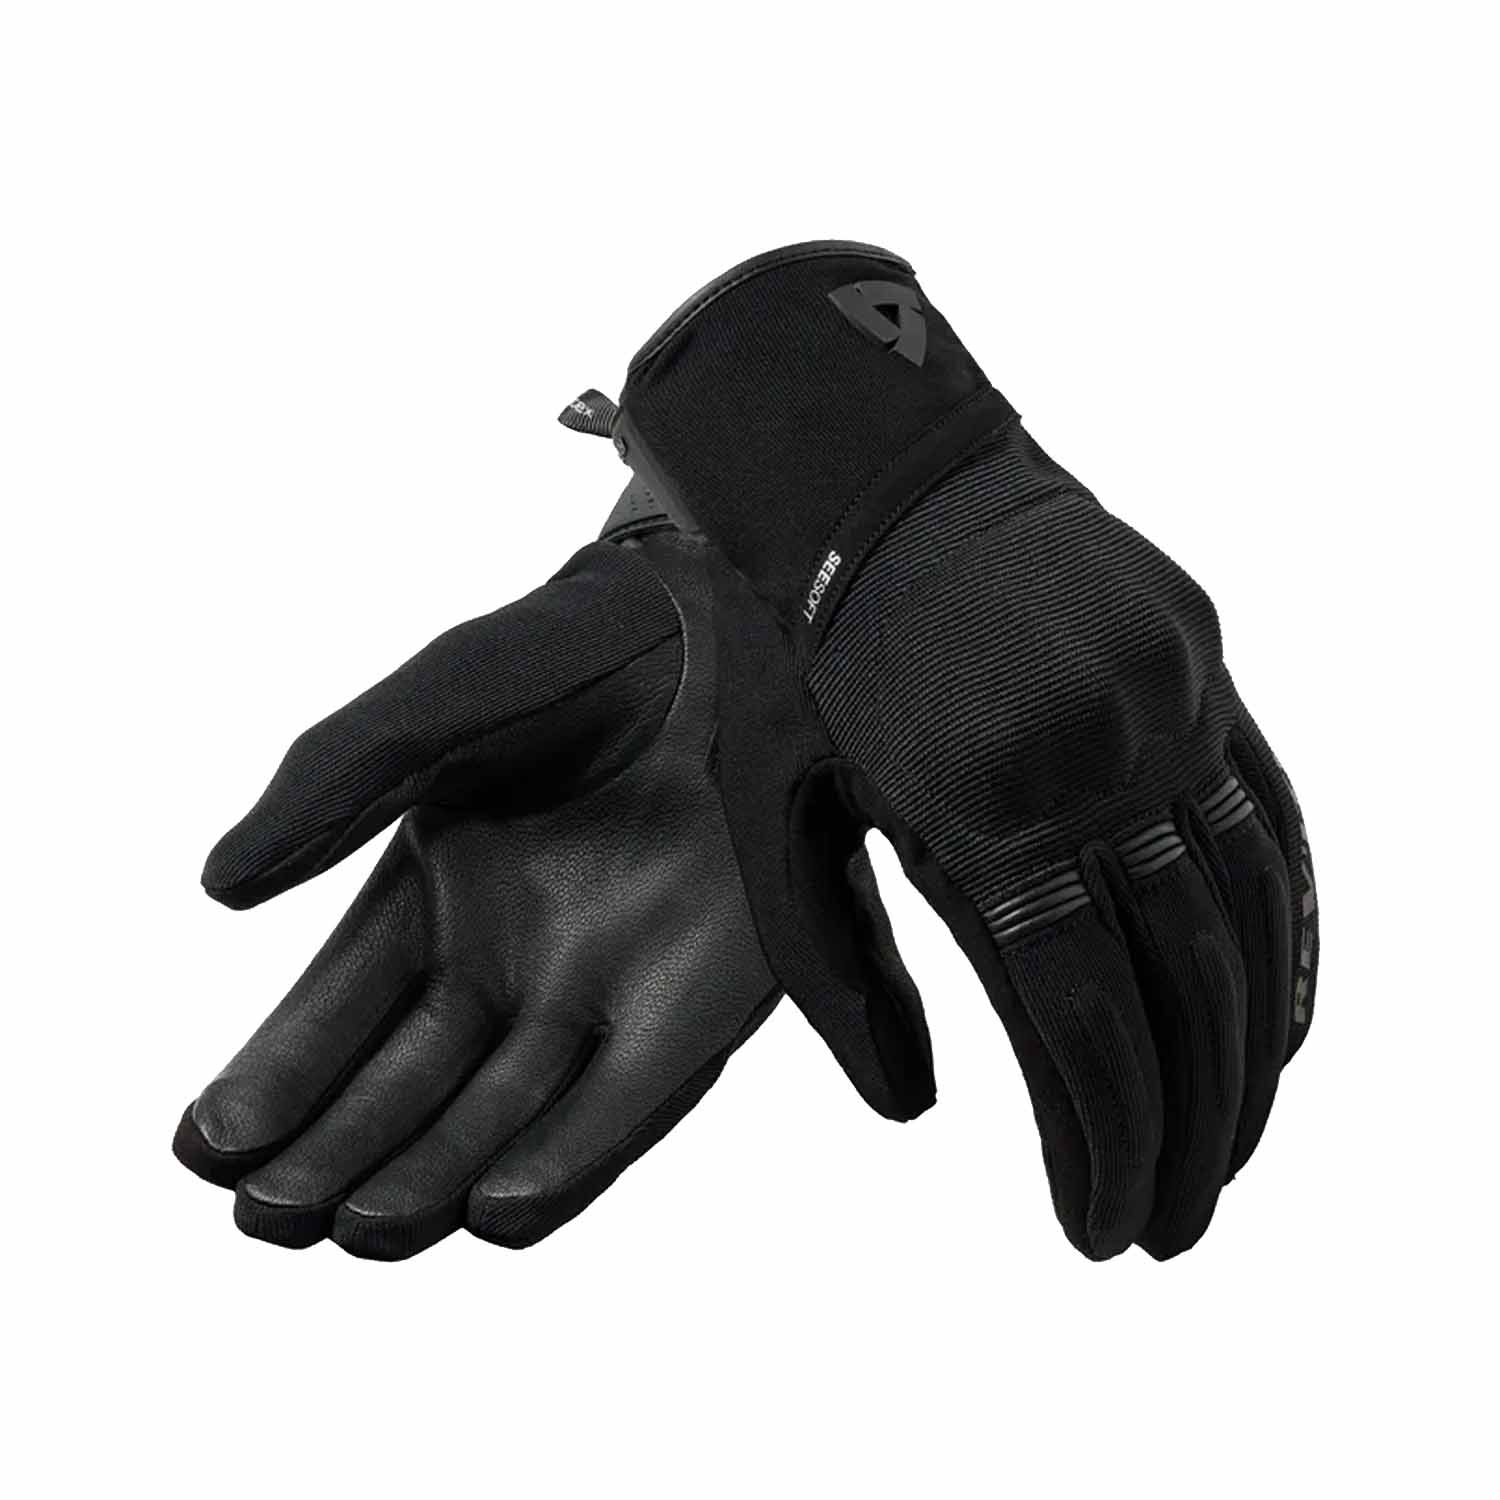 Image of REV'IT! Mosca 2 H2O Gloves Ladies Black Size XS EN